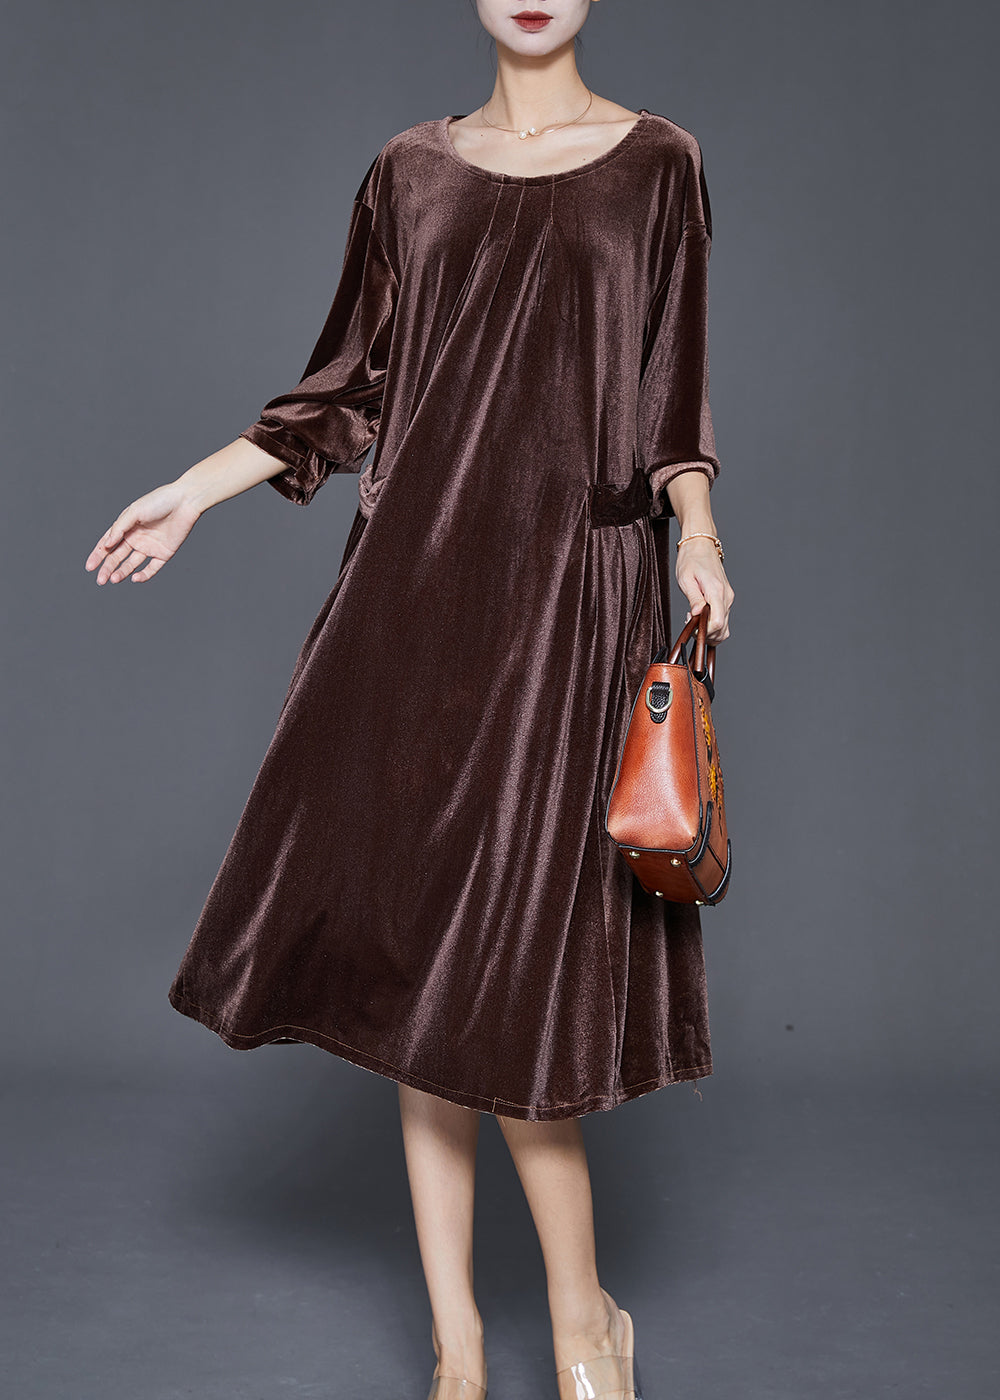 Chocolate Silk Velour Mid Dresses Oversized Pockets Fall